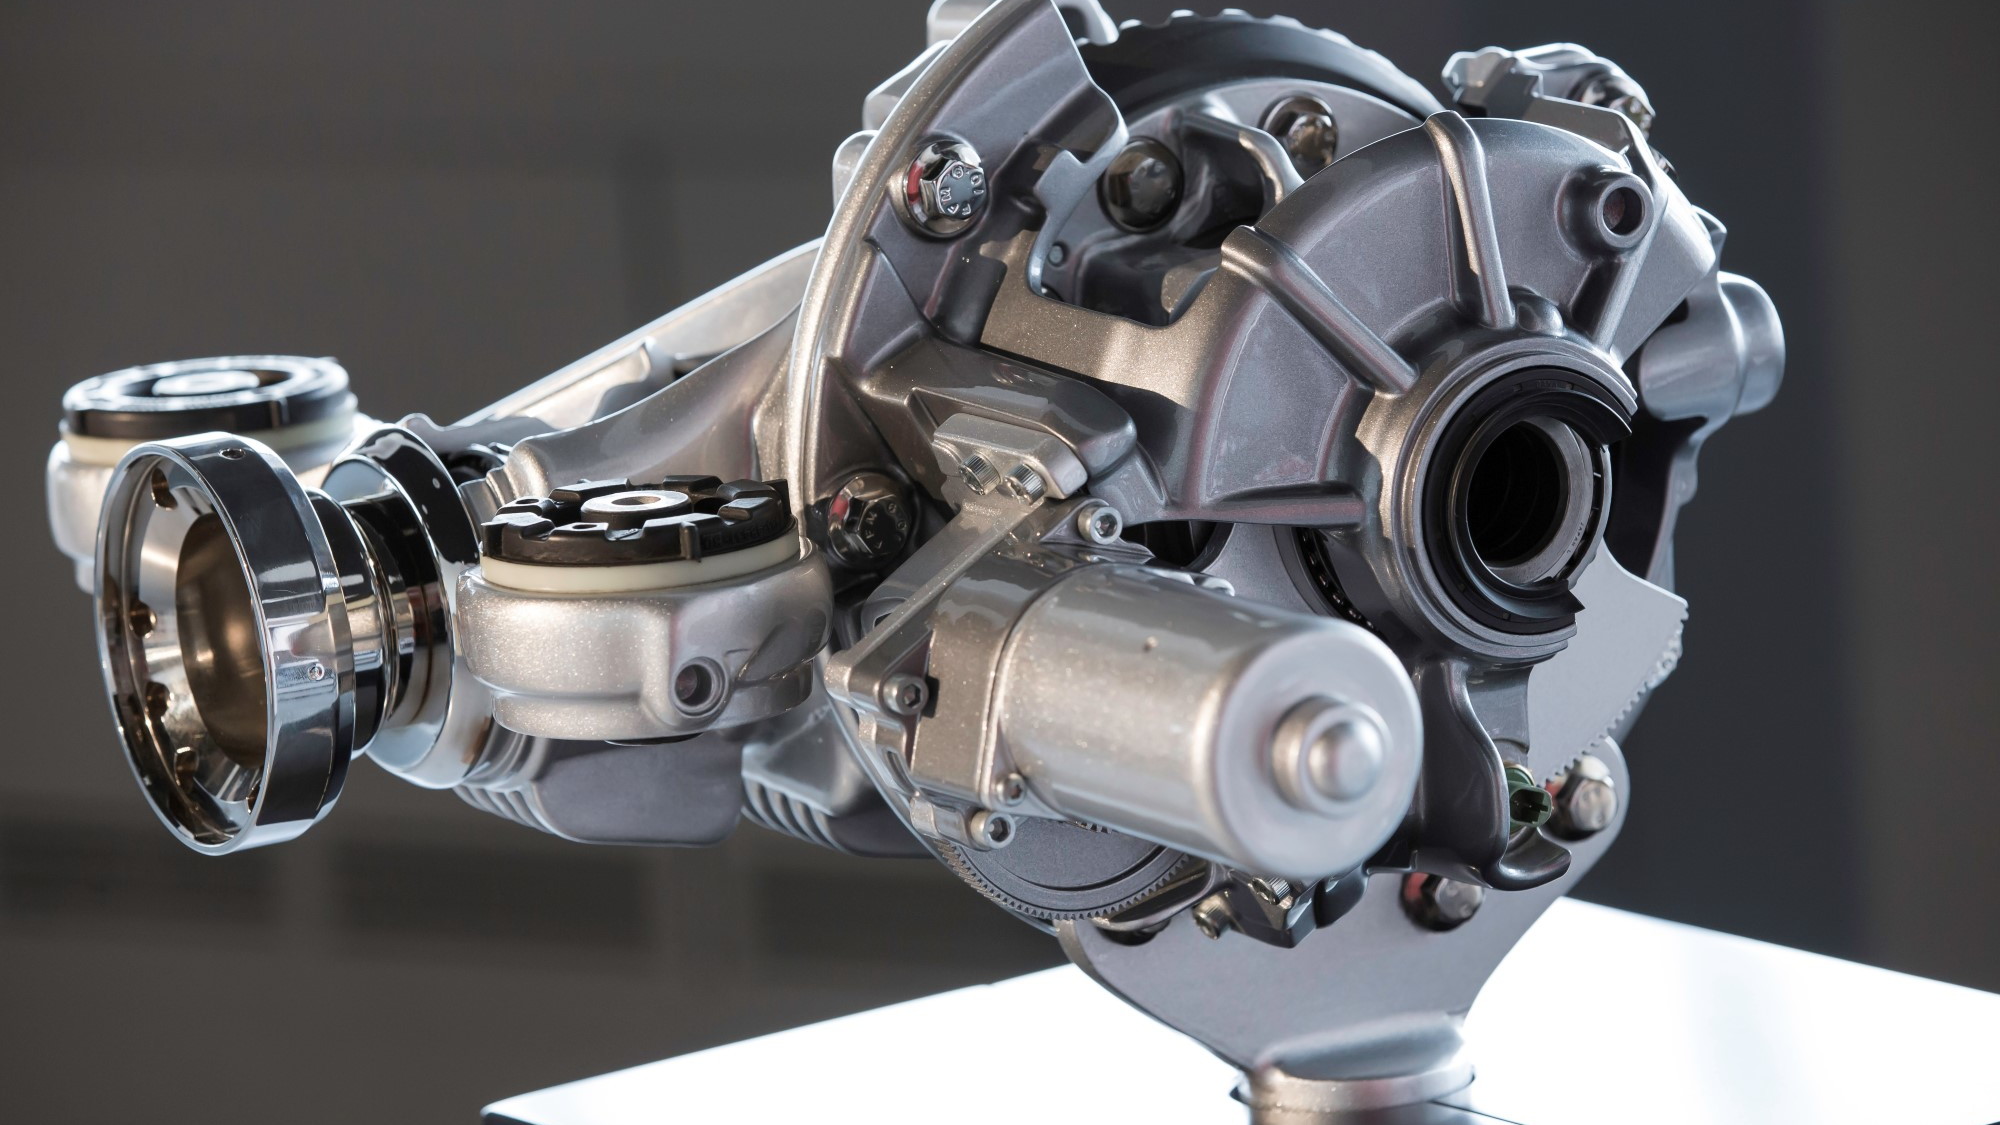 2014 Jaguar F-Type engineering displays